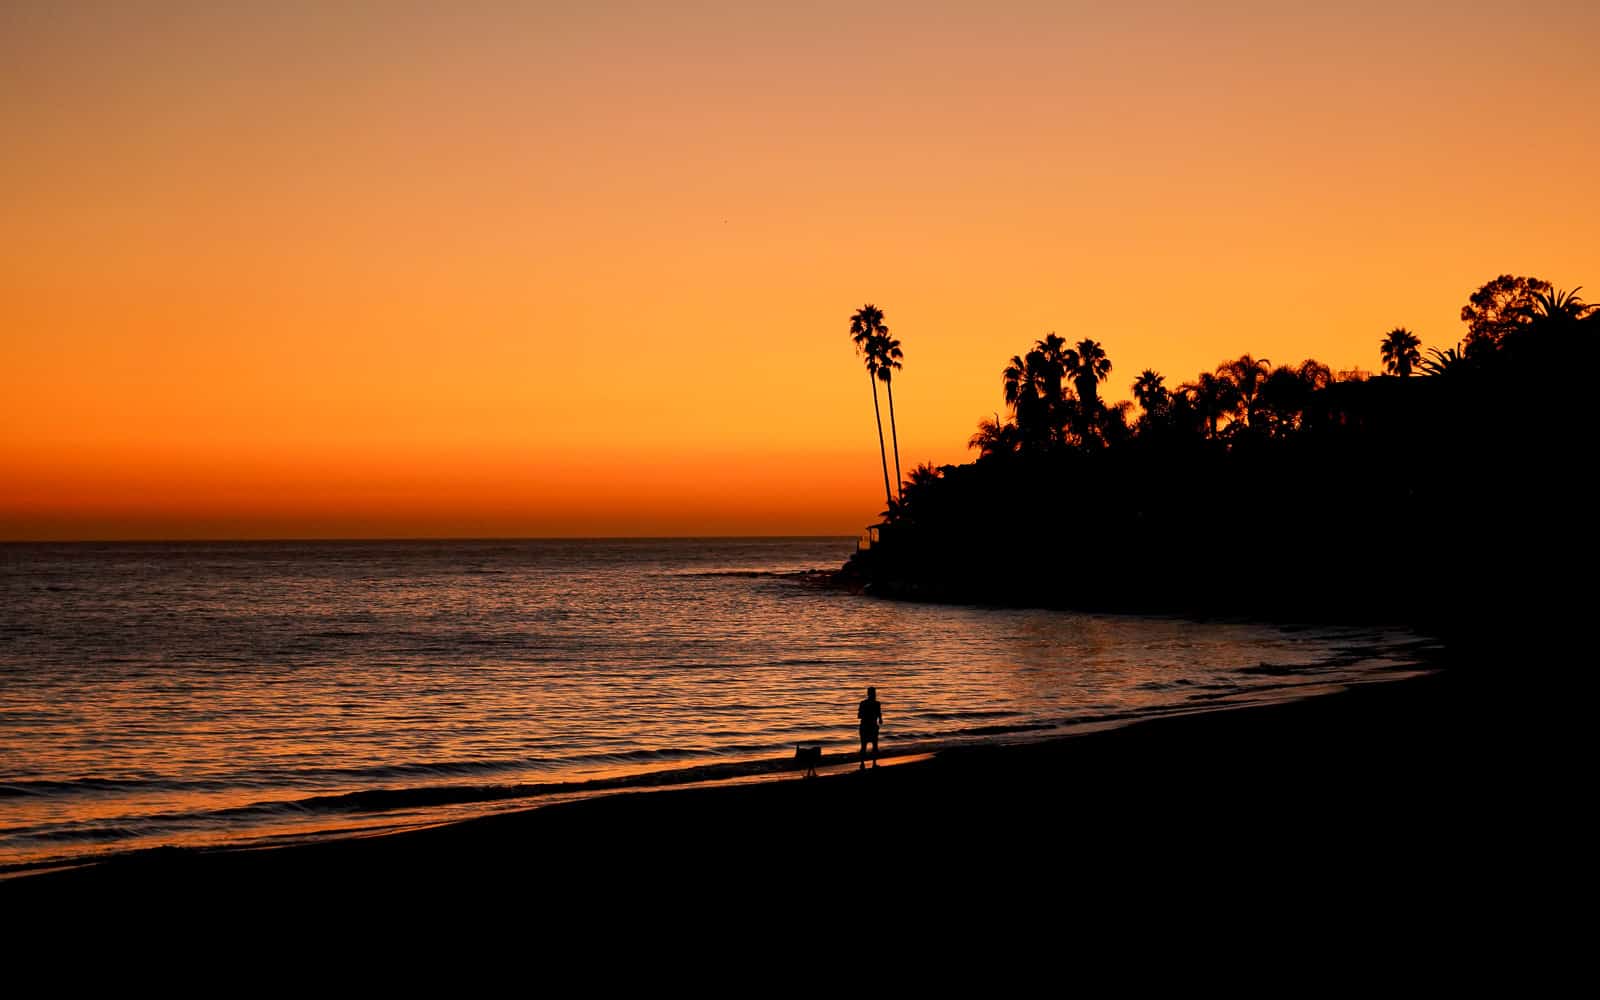 Santa Barbara beach sunset - weekend guide to Santa Barbara with kids